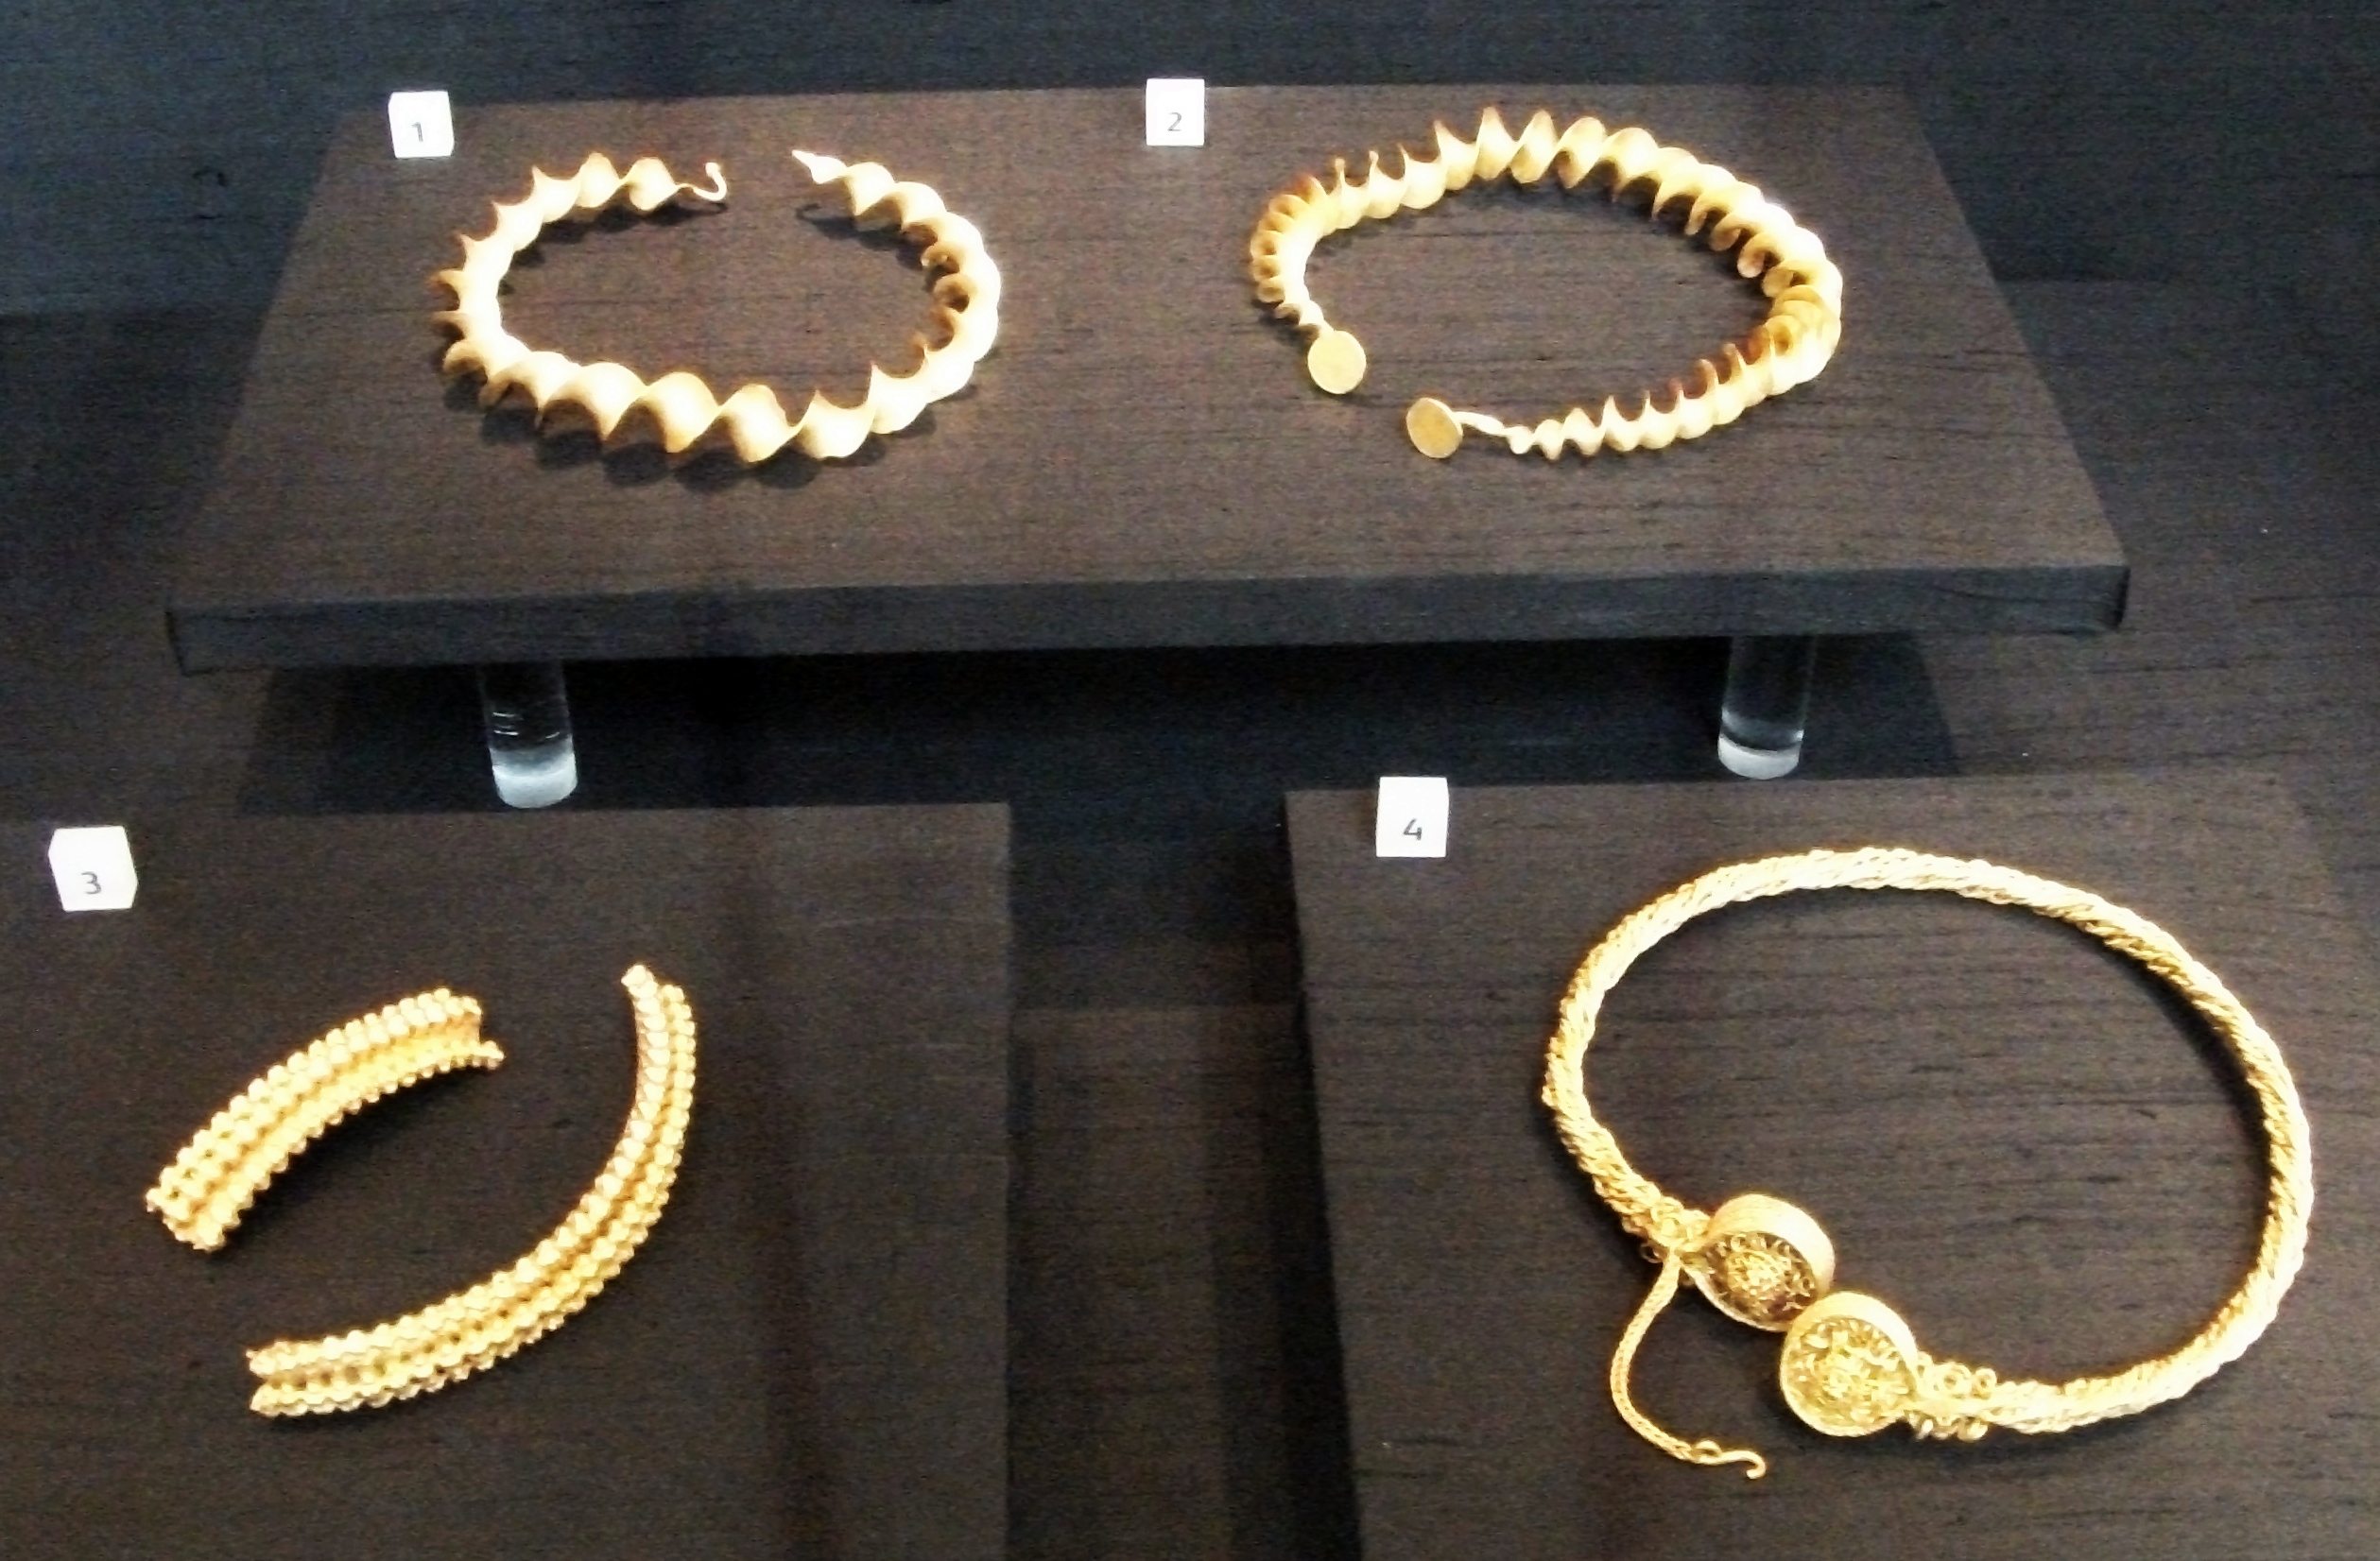 4 gold torcs on display